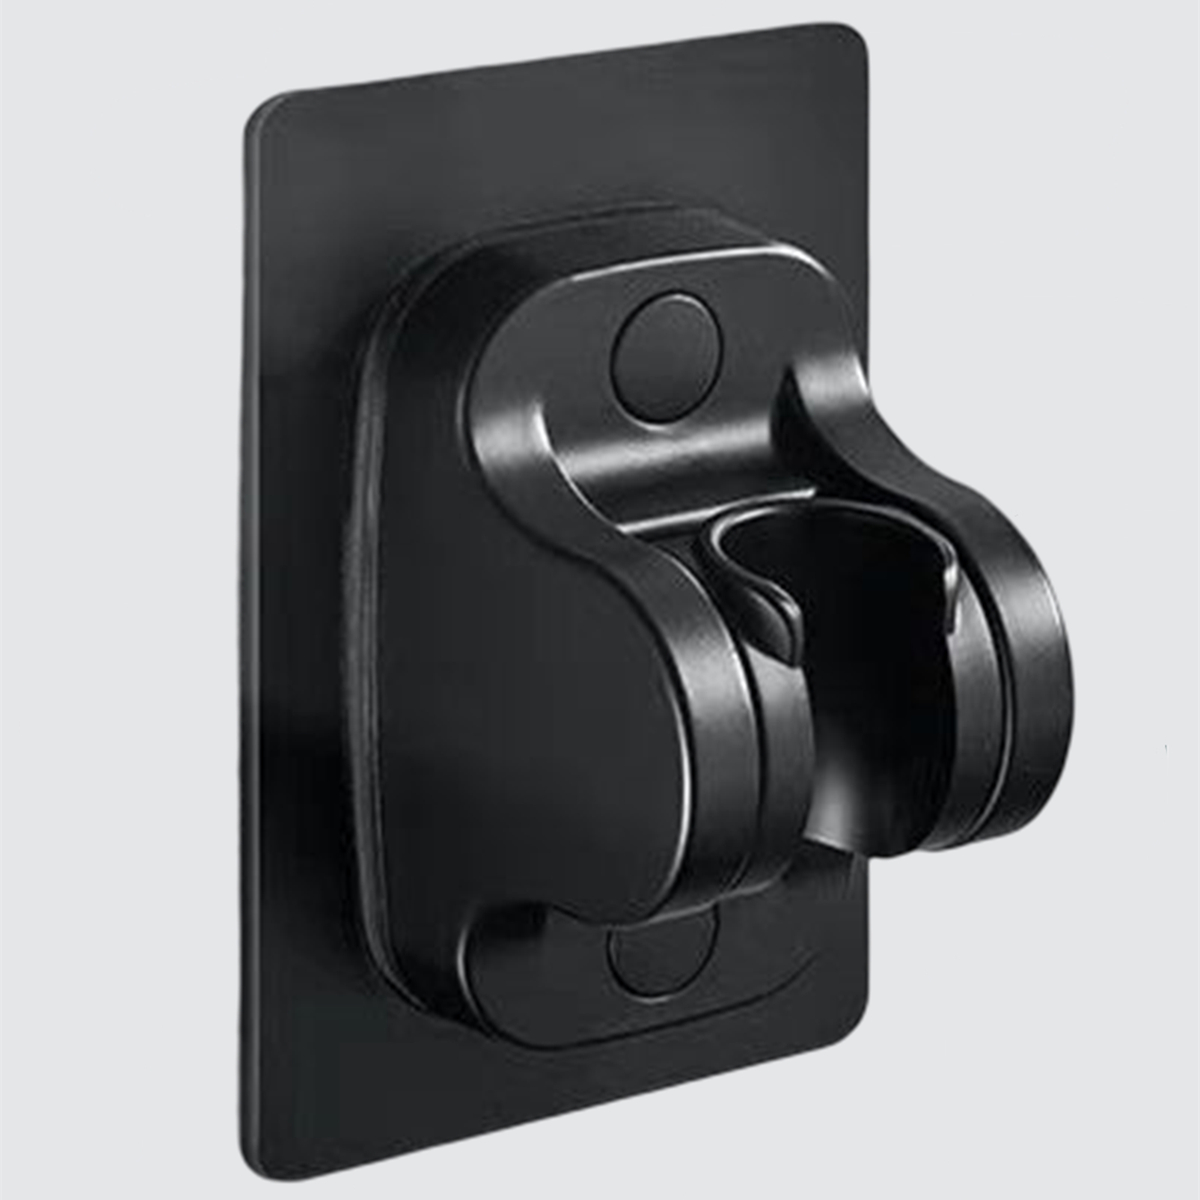 No Drilling Glue Angle Shower Holder, 2pcs Wall Mounted Adjustable Shower  Head Holder, 5 Adjustable Angle Modes, Ingot Shape Suitable For Bathroom,  Ho